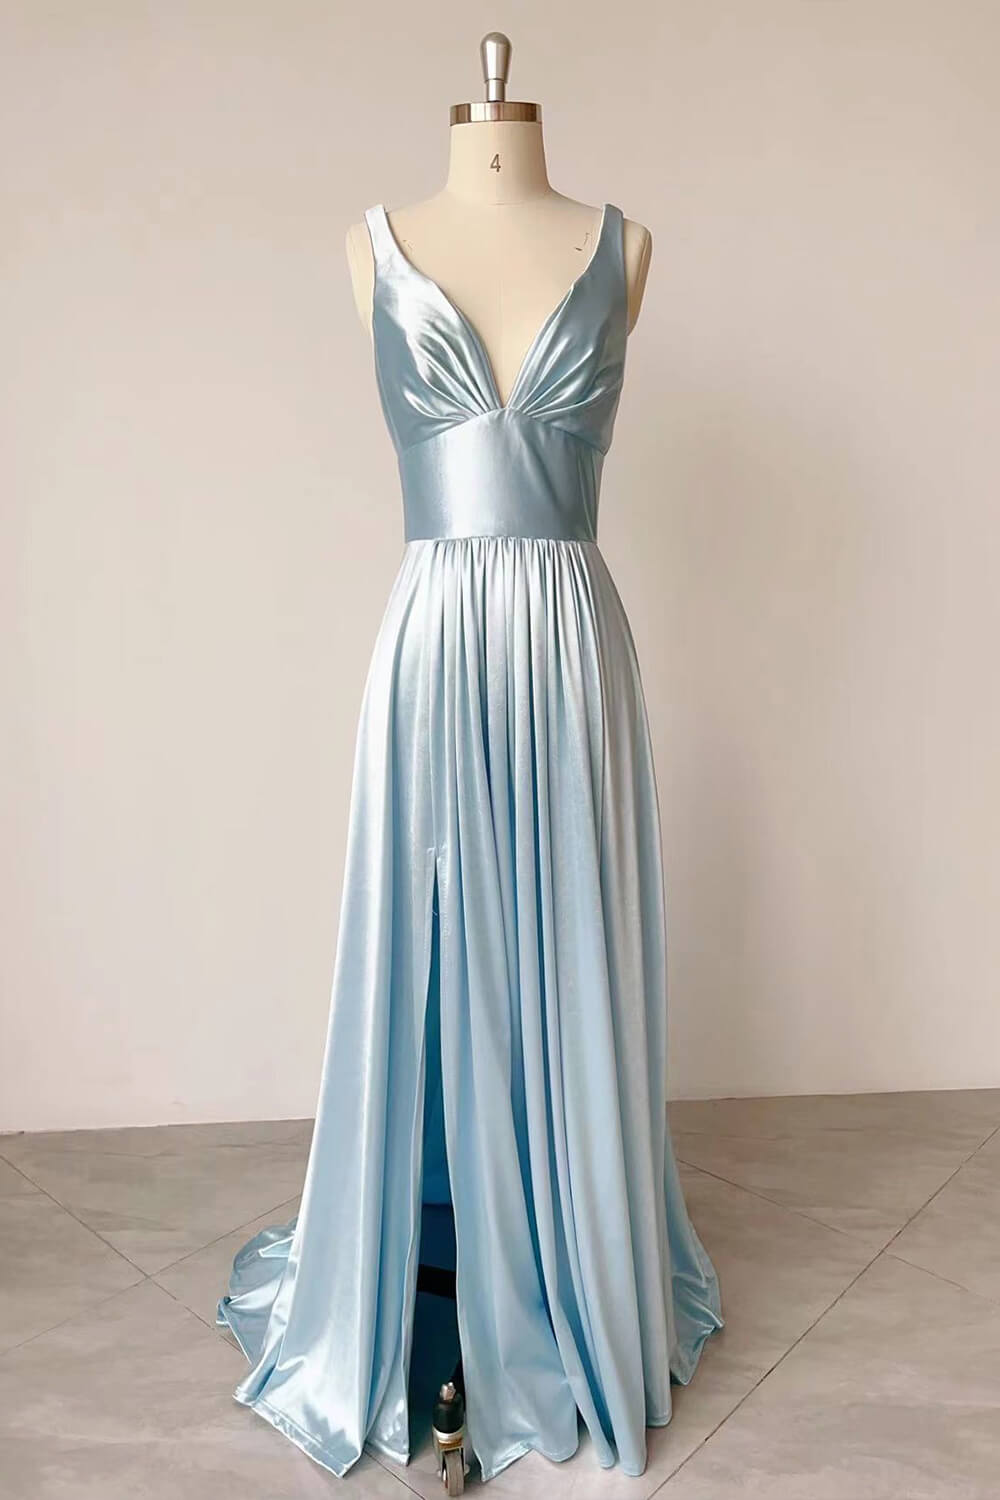 Hebochic V Neck Light Blue Satin Slit Long Gown Prom Dress Evening Dress